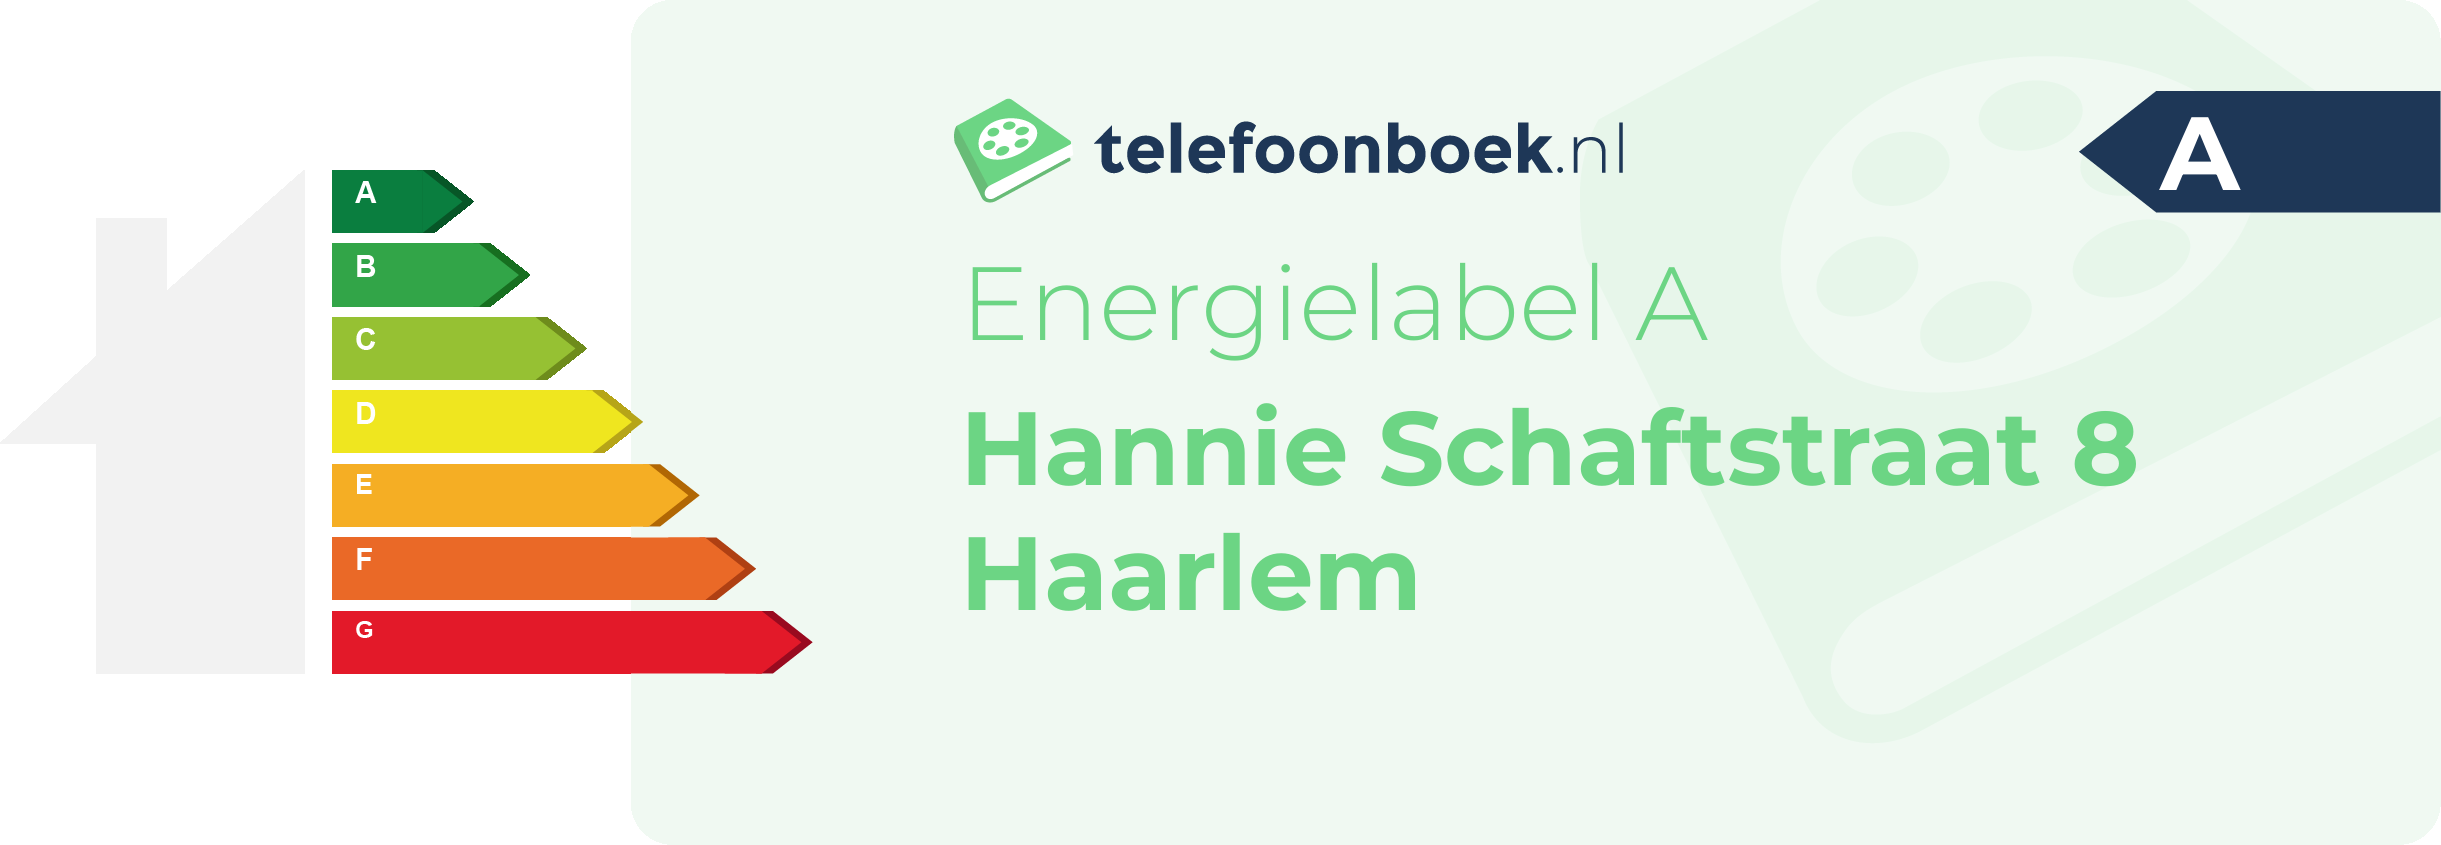 Energielabel Hannie Schaftstraat 8 Haarlem